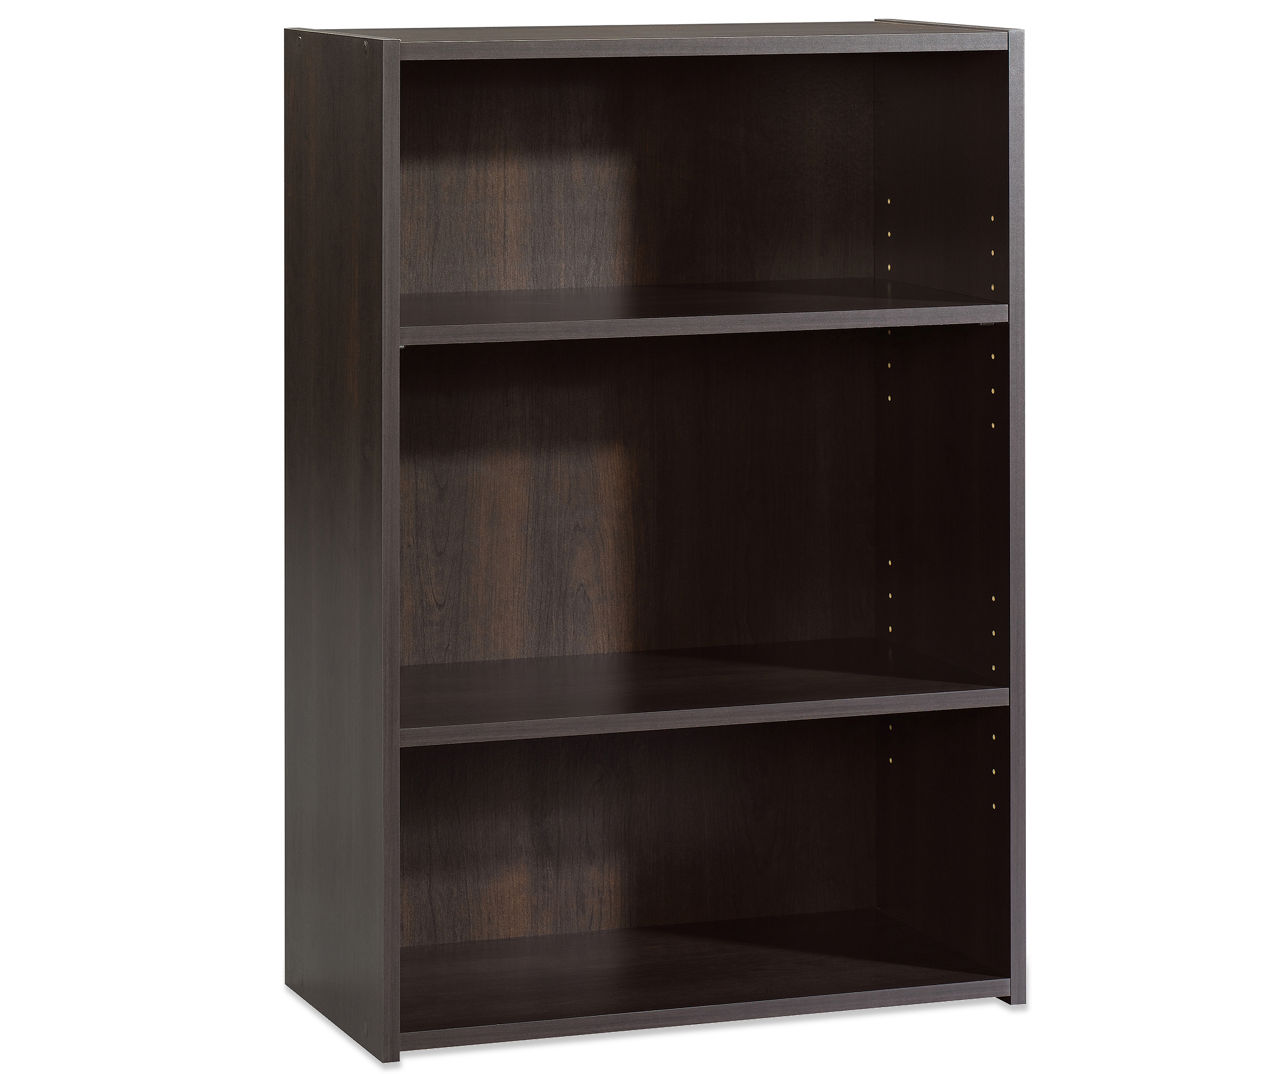 3 Shelf Bookcase Espresso Brown - Room Essentials™